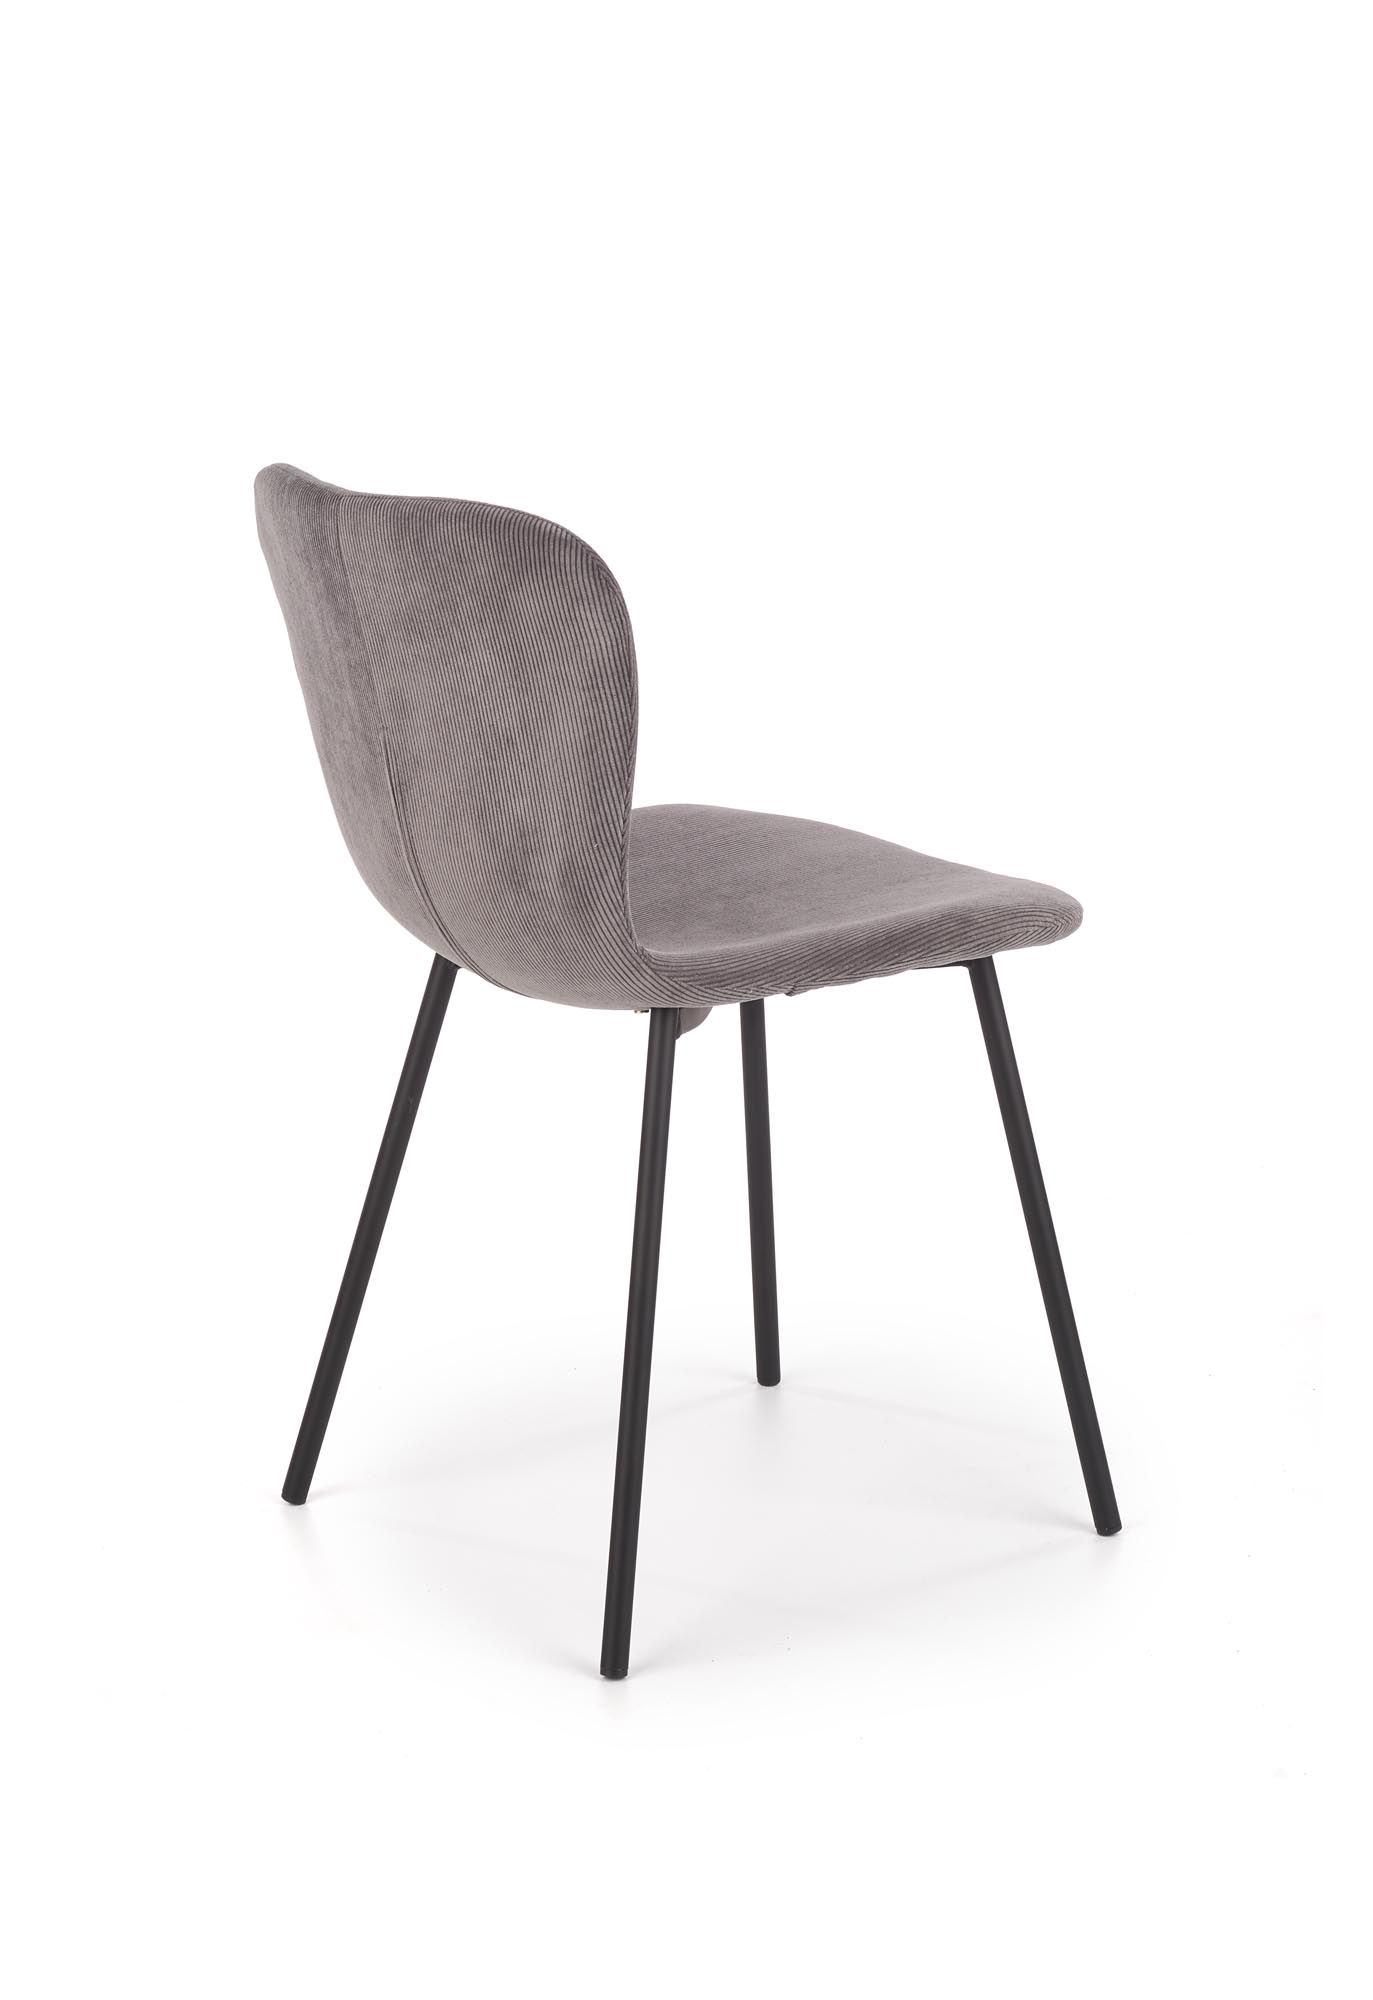 стул halmar k414, серый